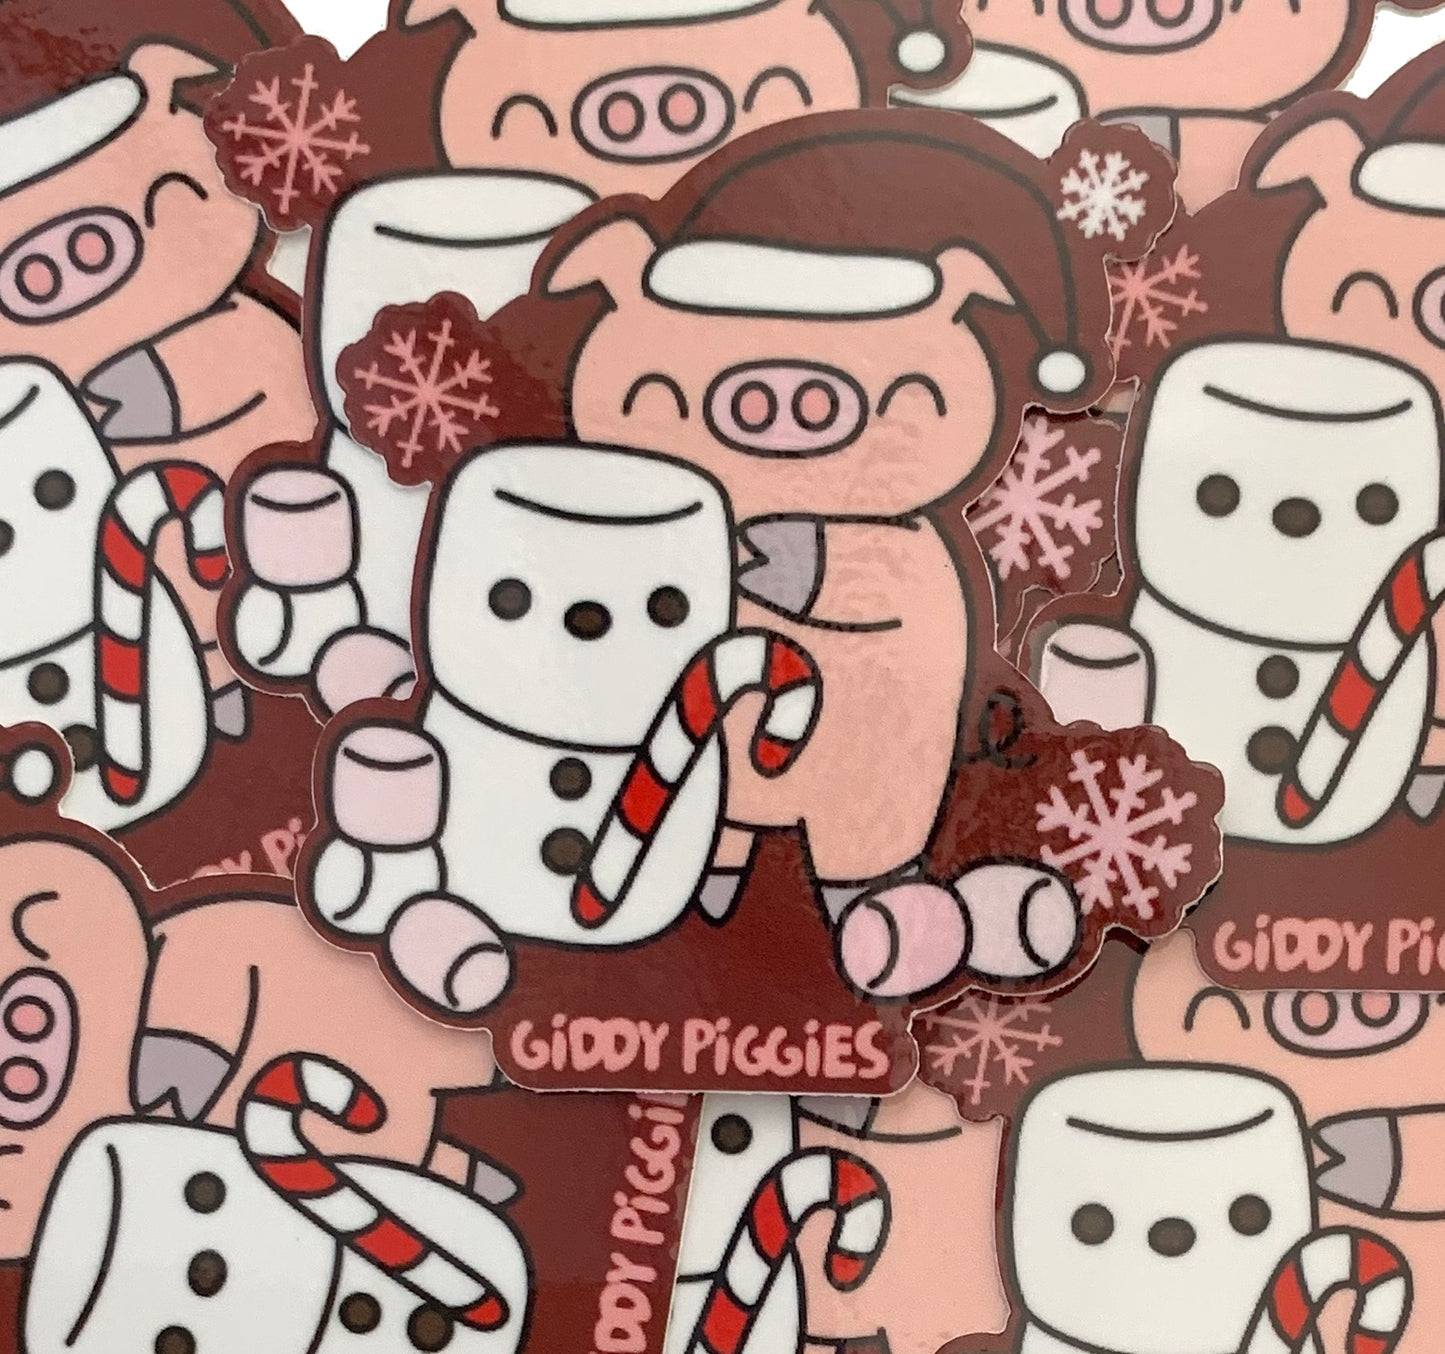 Giddy Piggies Marshmallow Snowman Glossy Sticker